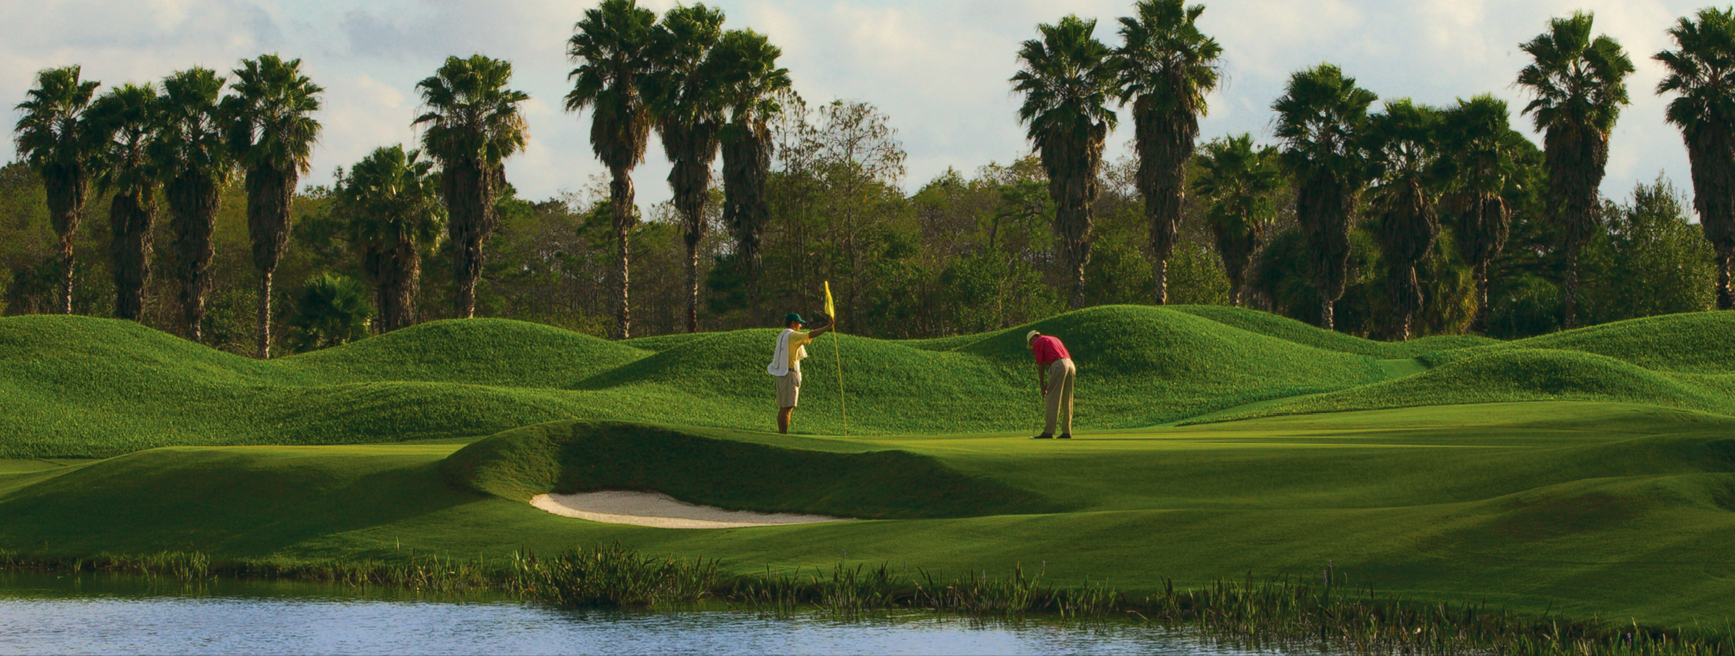 The Dye Preserve Golf Club in Jupiter, Florida